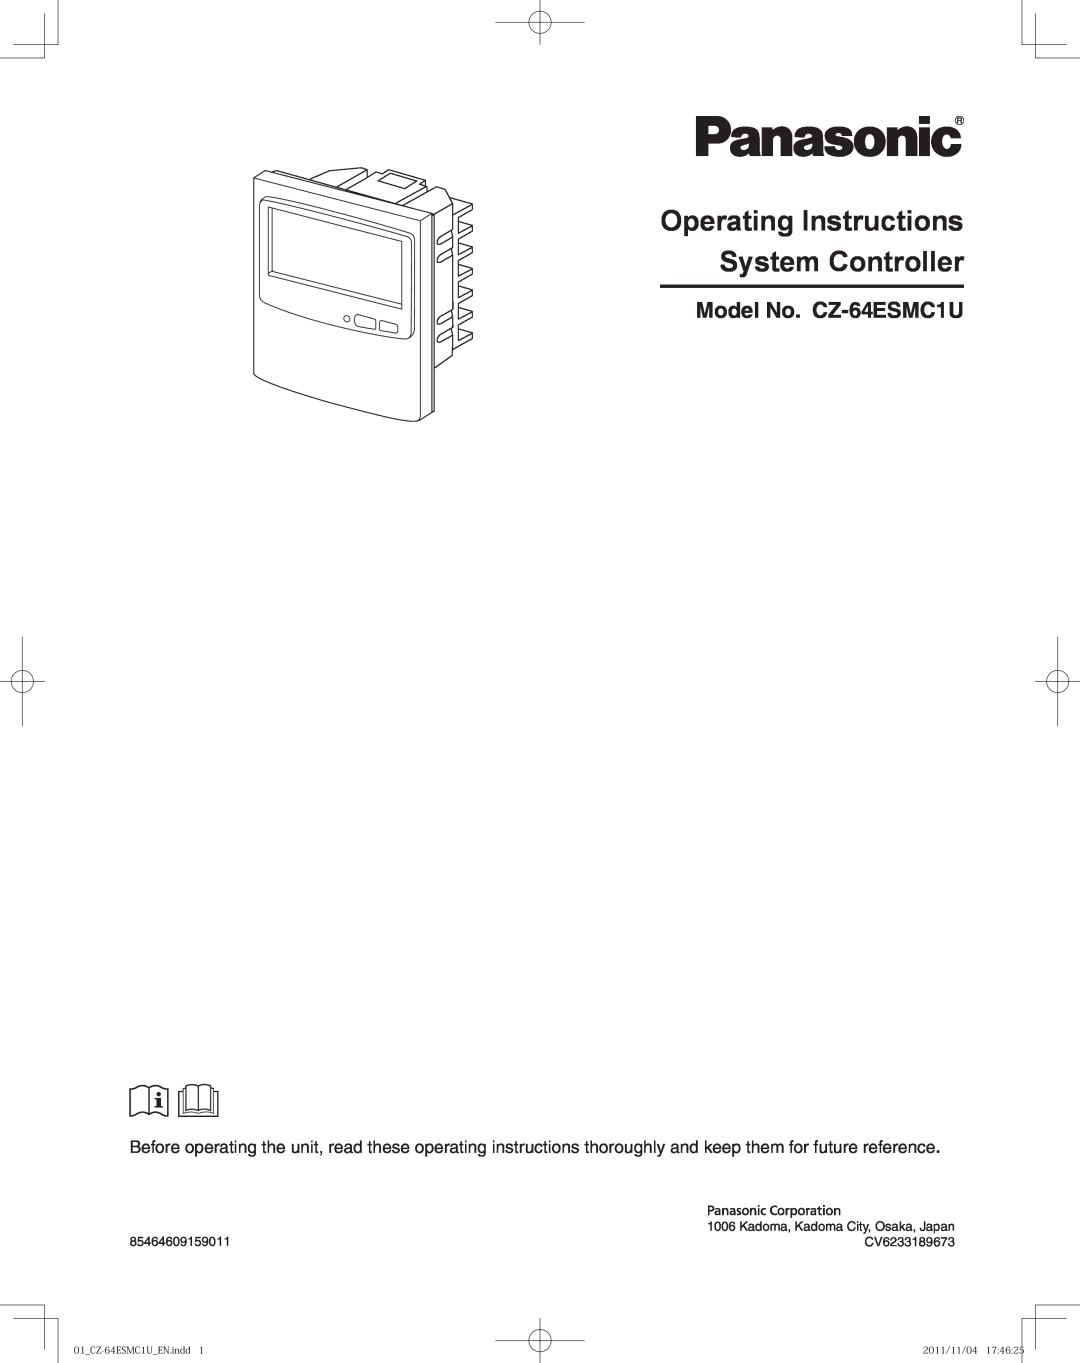 Panasonic manual Operating Instructions System Controller, Model No. CZ-64ESMC1U, Kadoma, Kadoma City, Osaka, Japan 